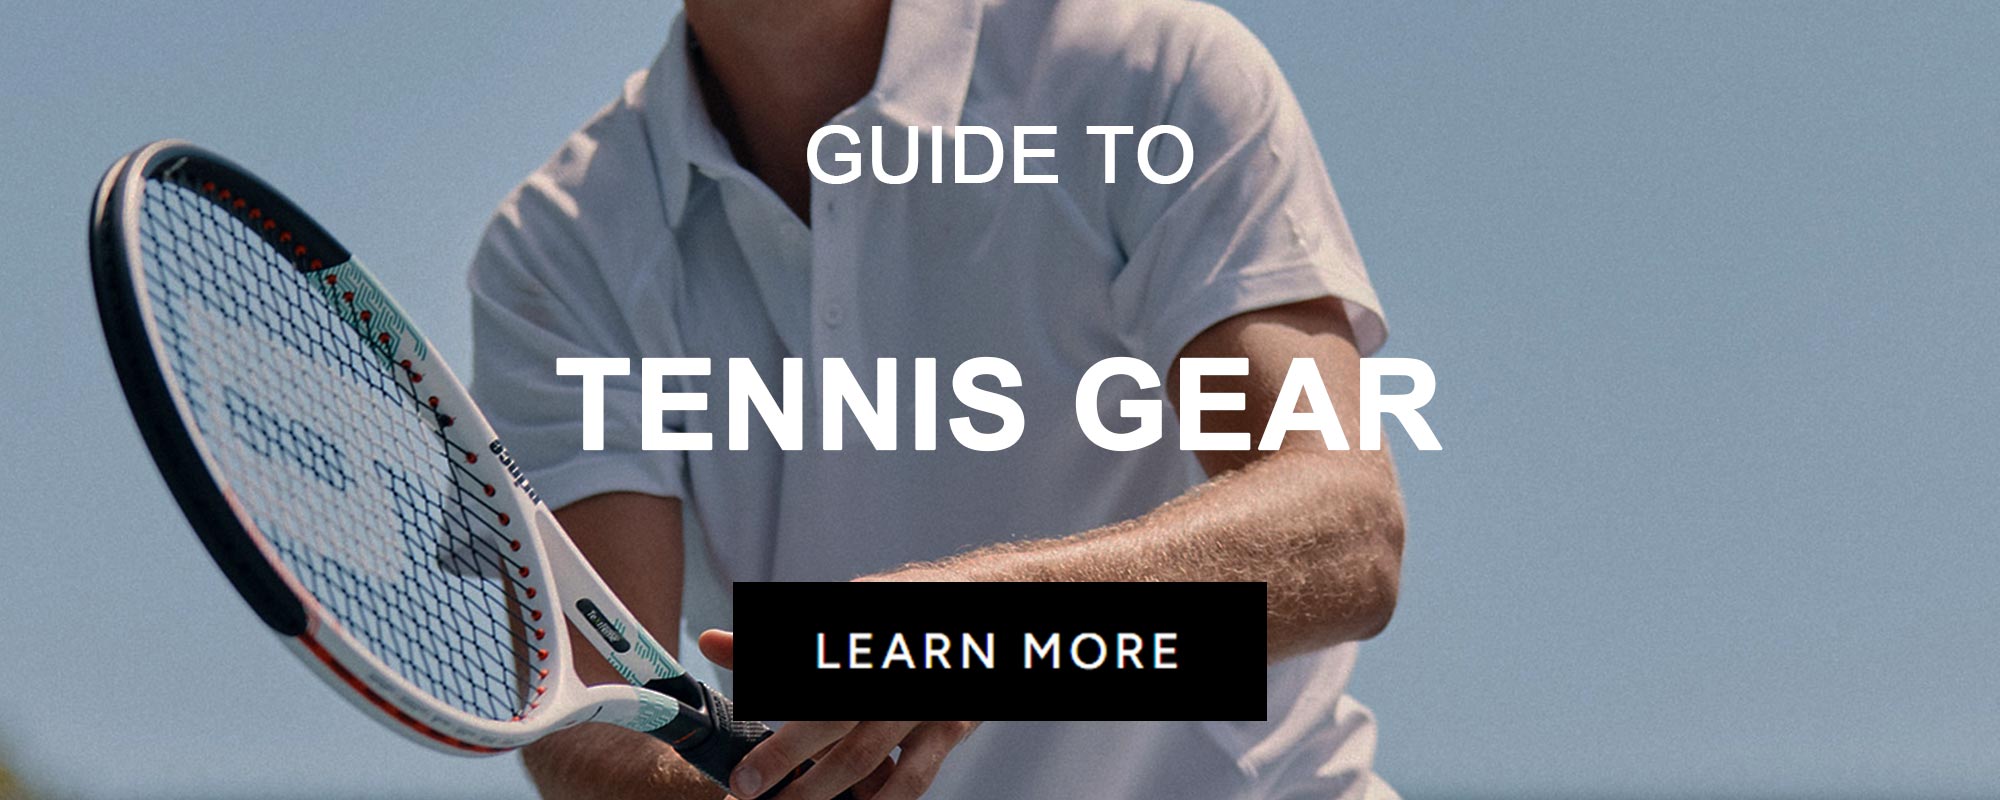 GUIDES_SPORT_TennisGear.jpg